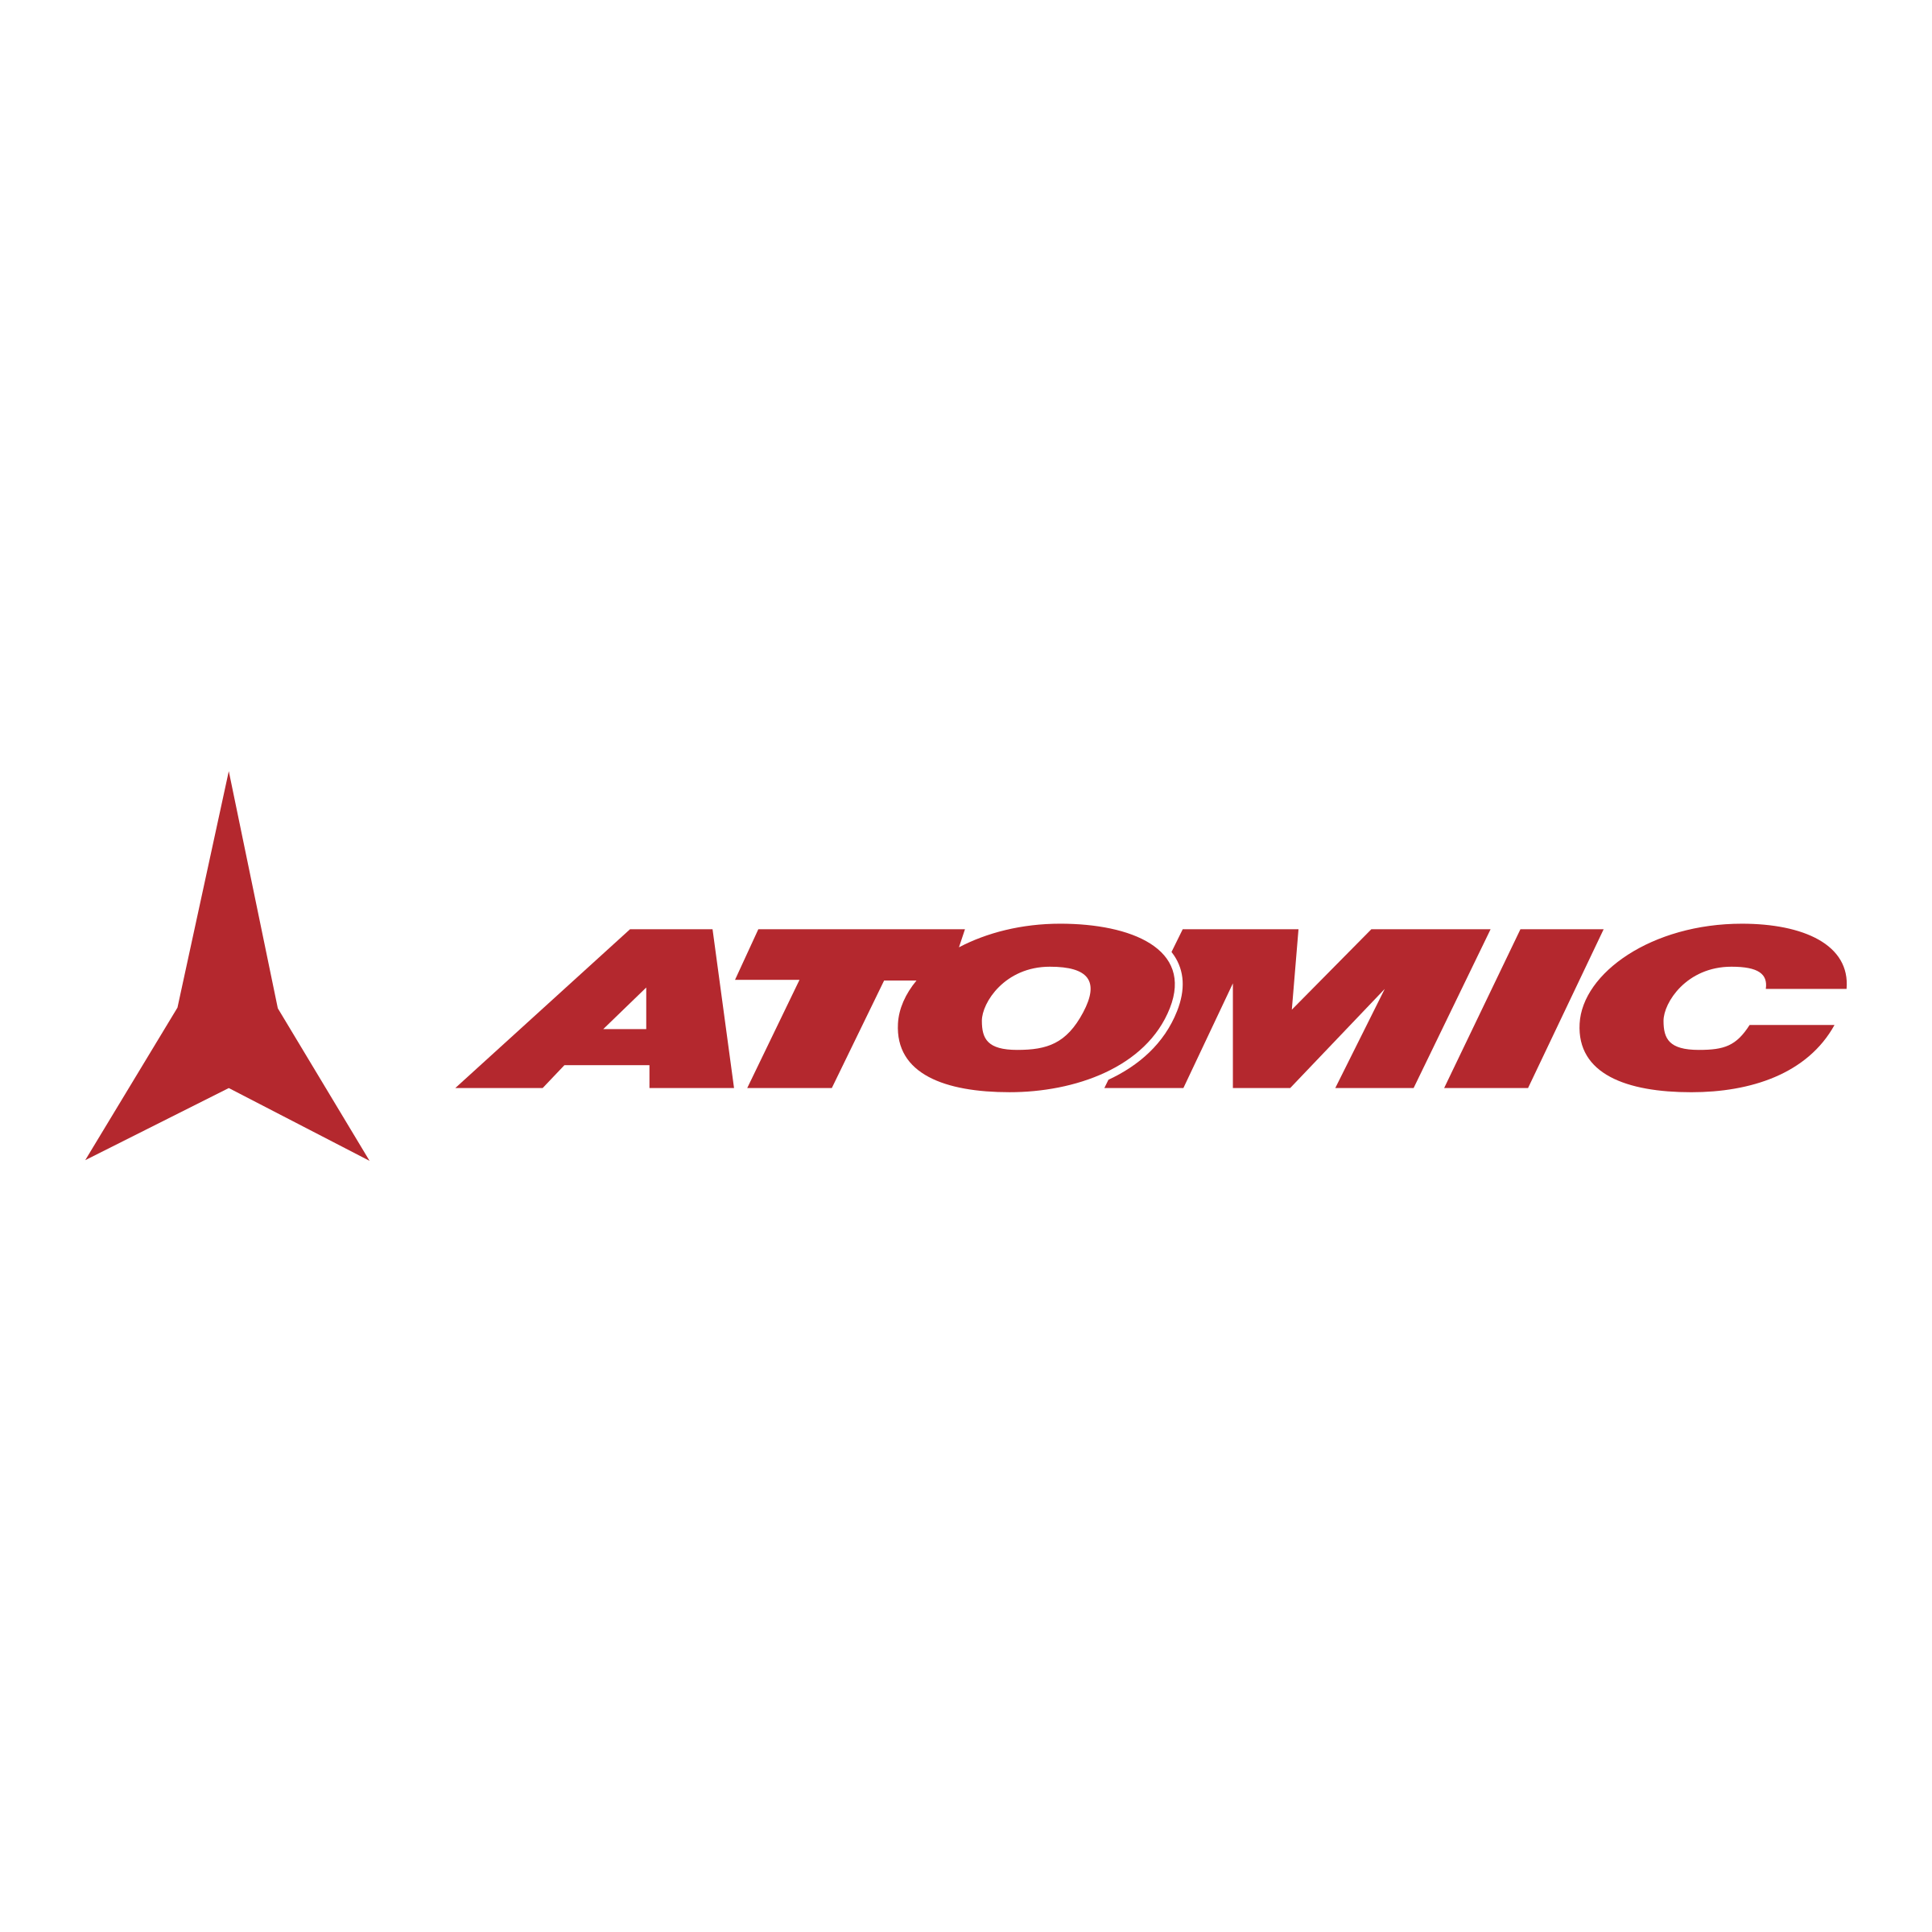 Atomic Logo - Atomic Logo PNG Transparent & SVG Vector